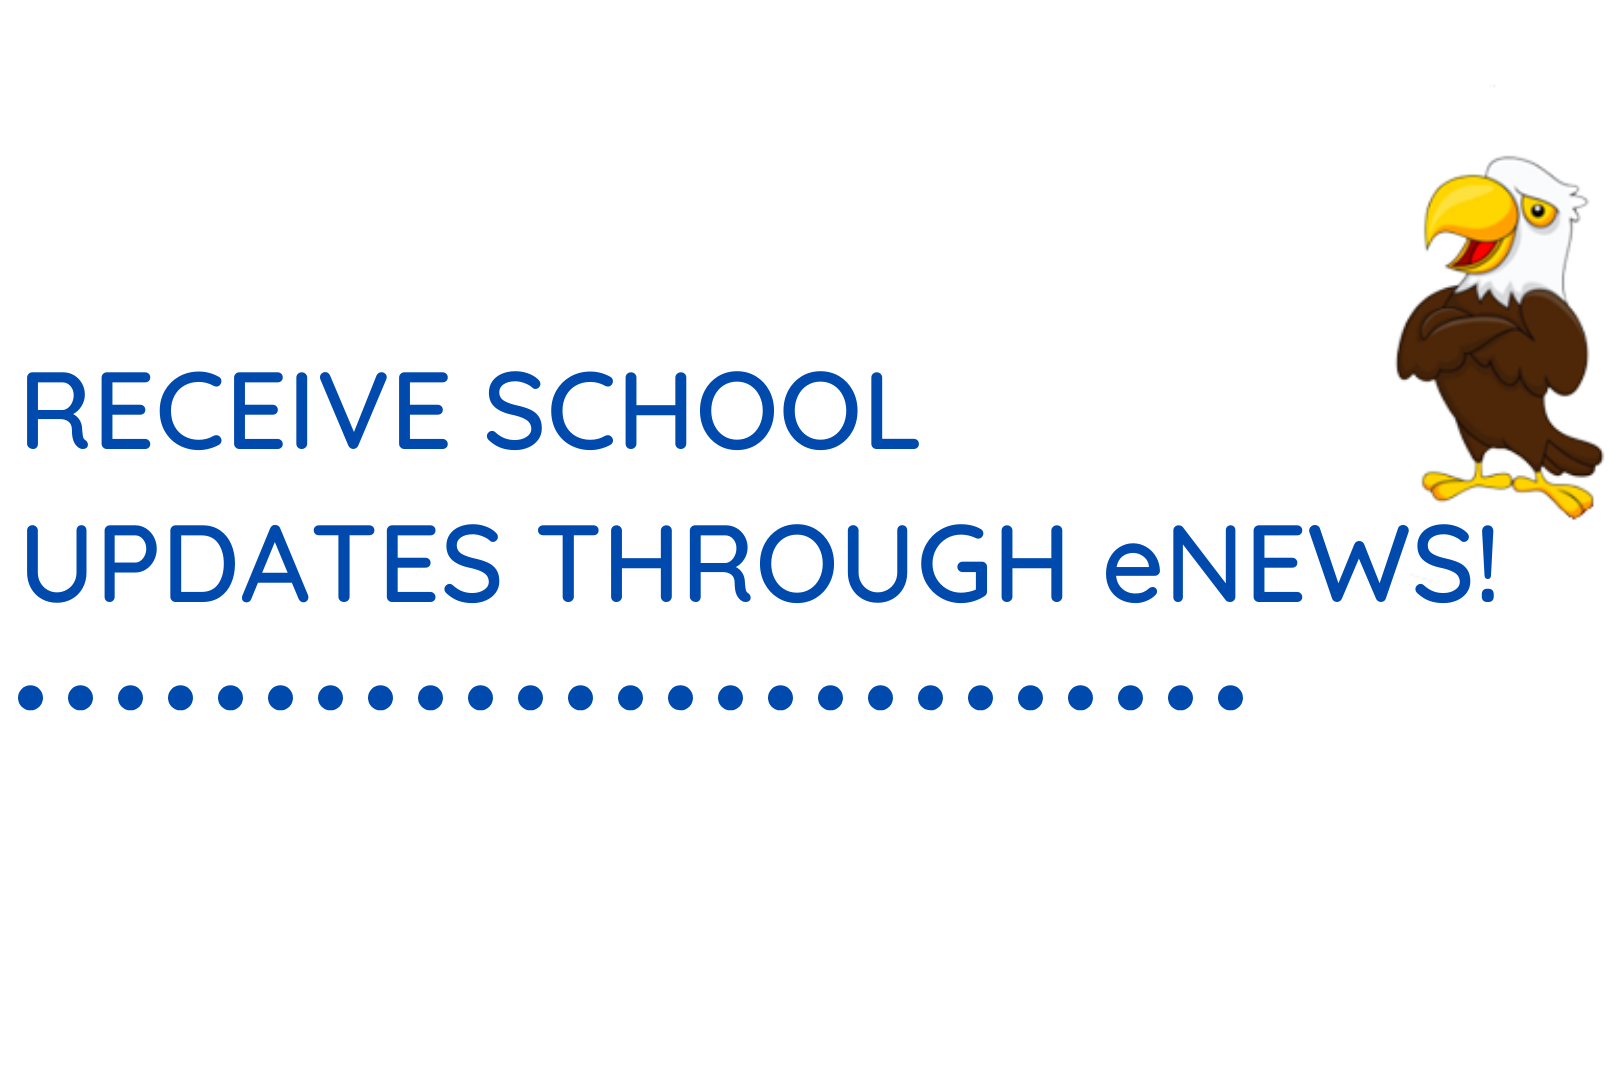 Sign up to receive school updates through enews